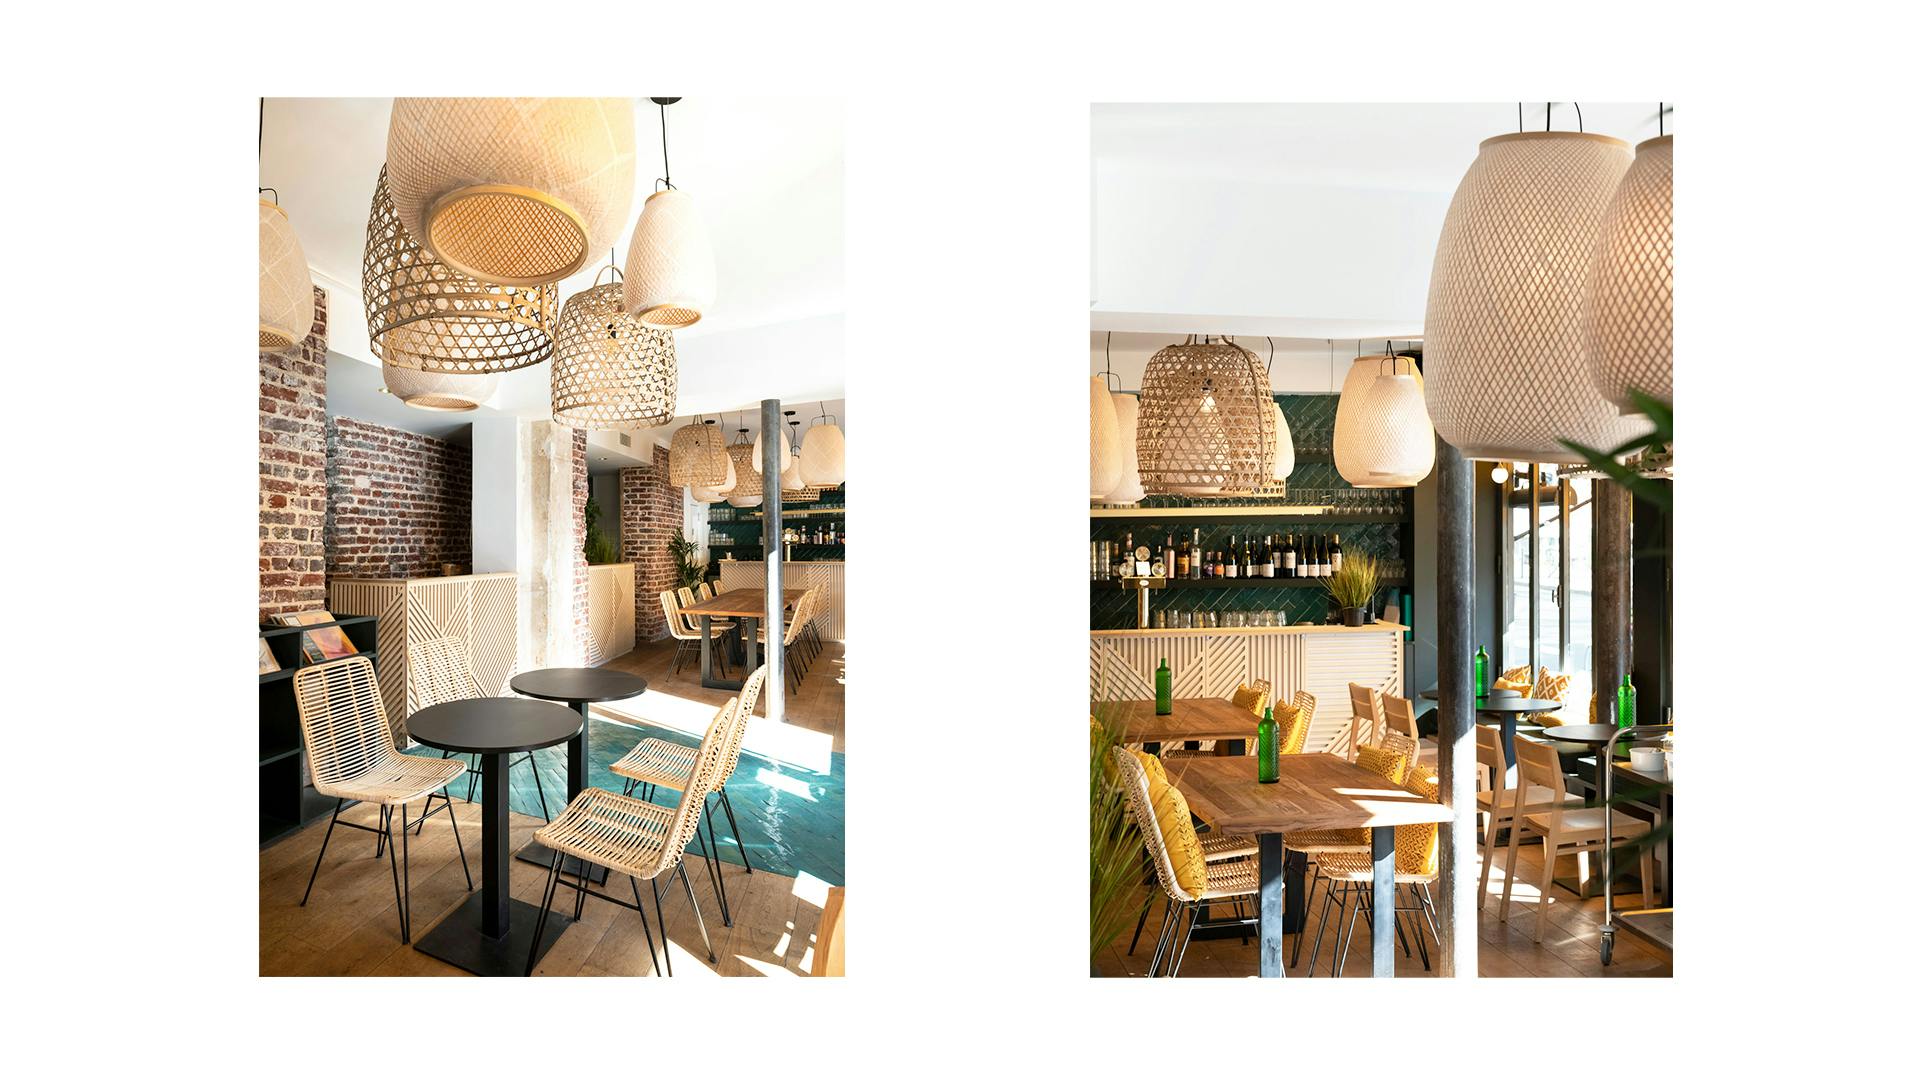 Djawa - restaurant - interior design - Paris - lighting - light - indonesian